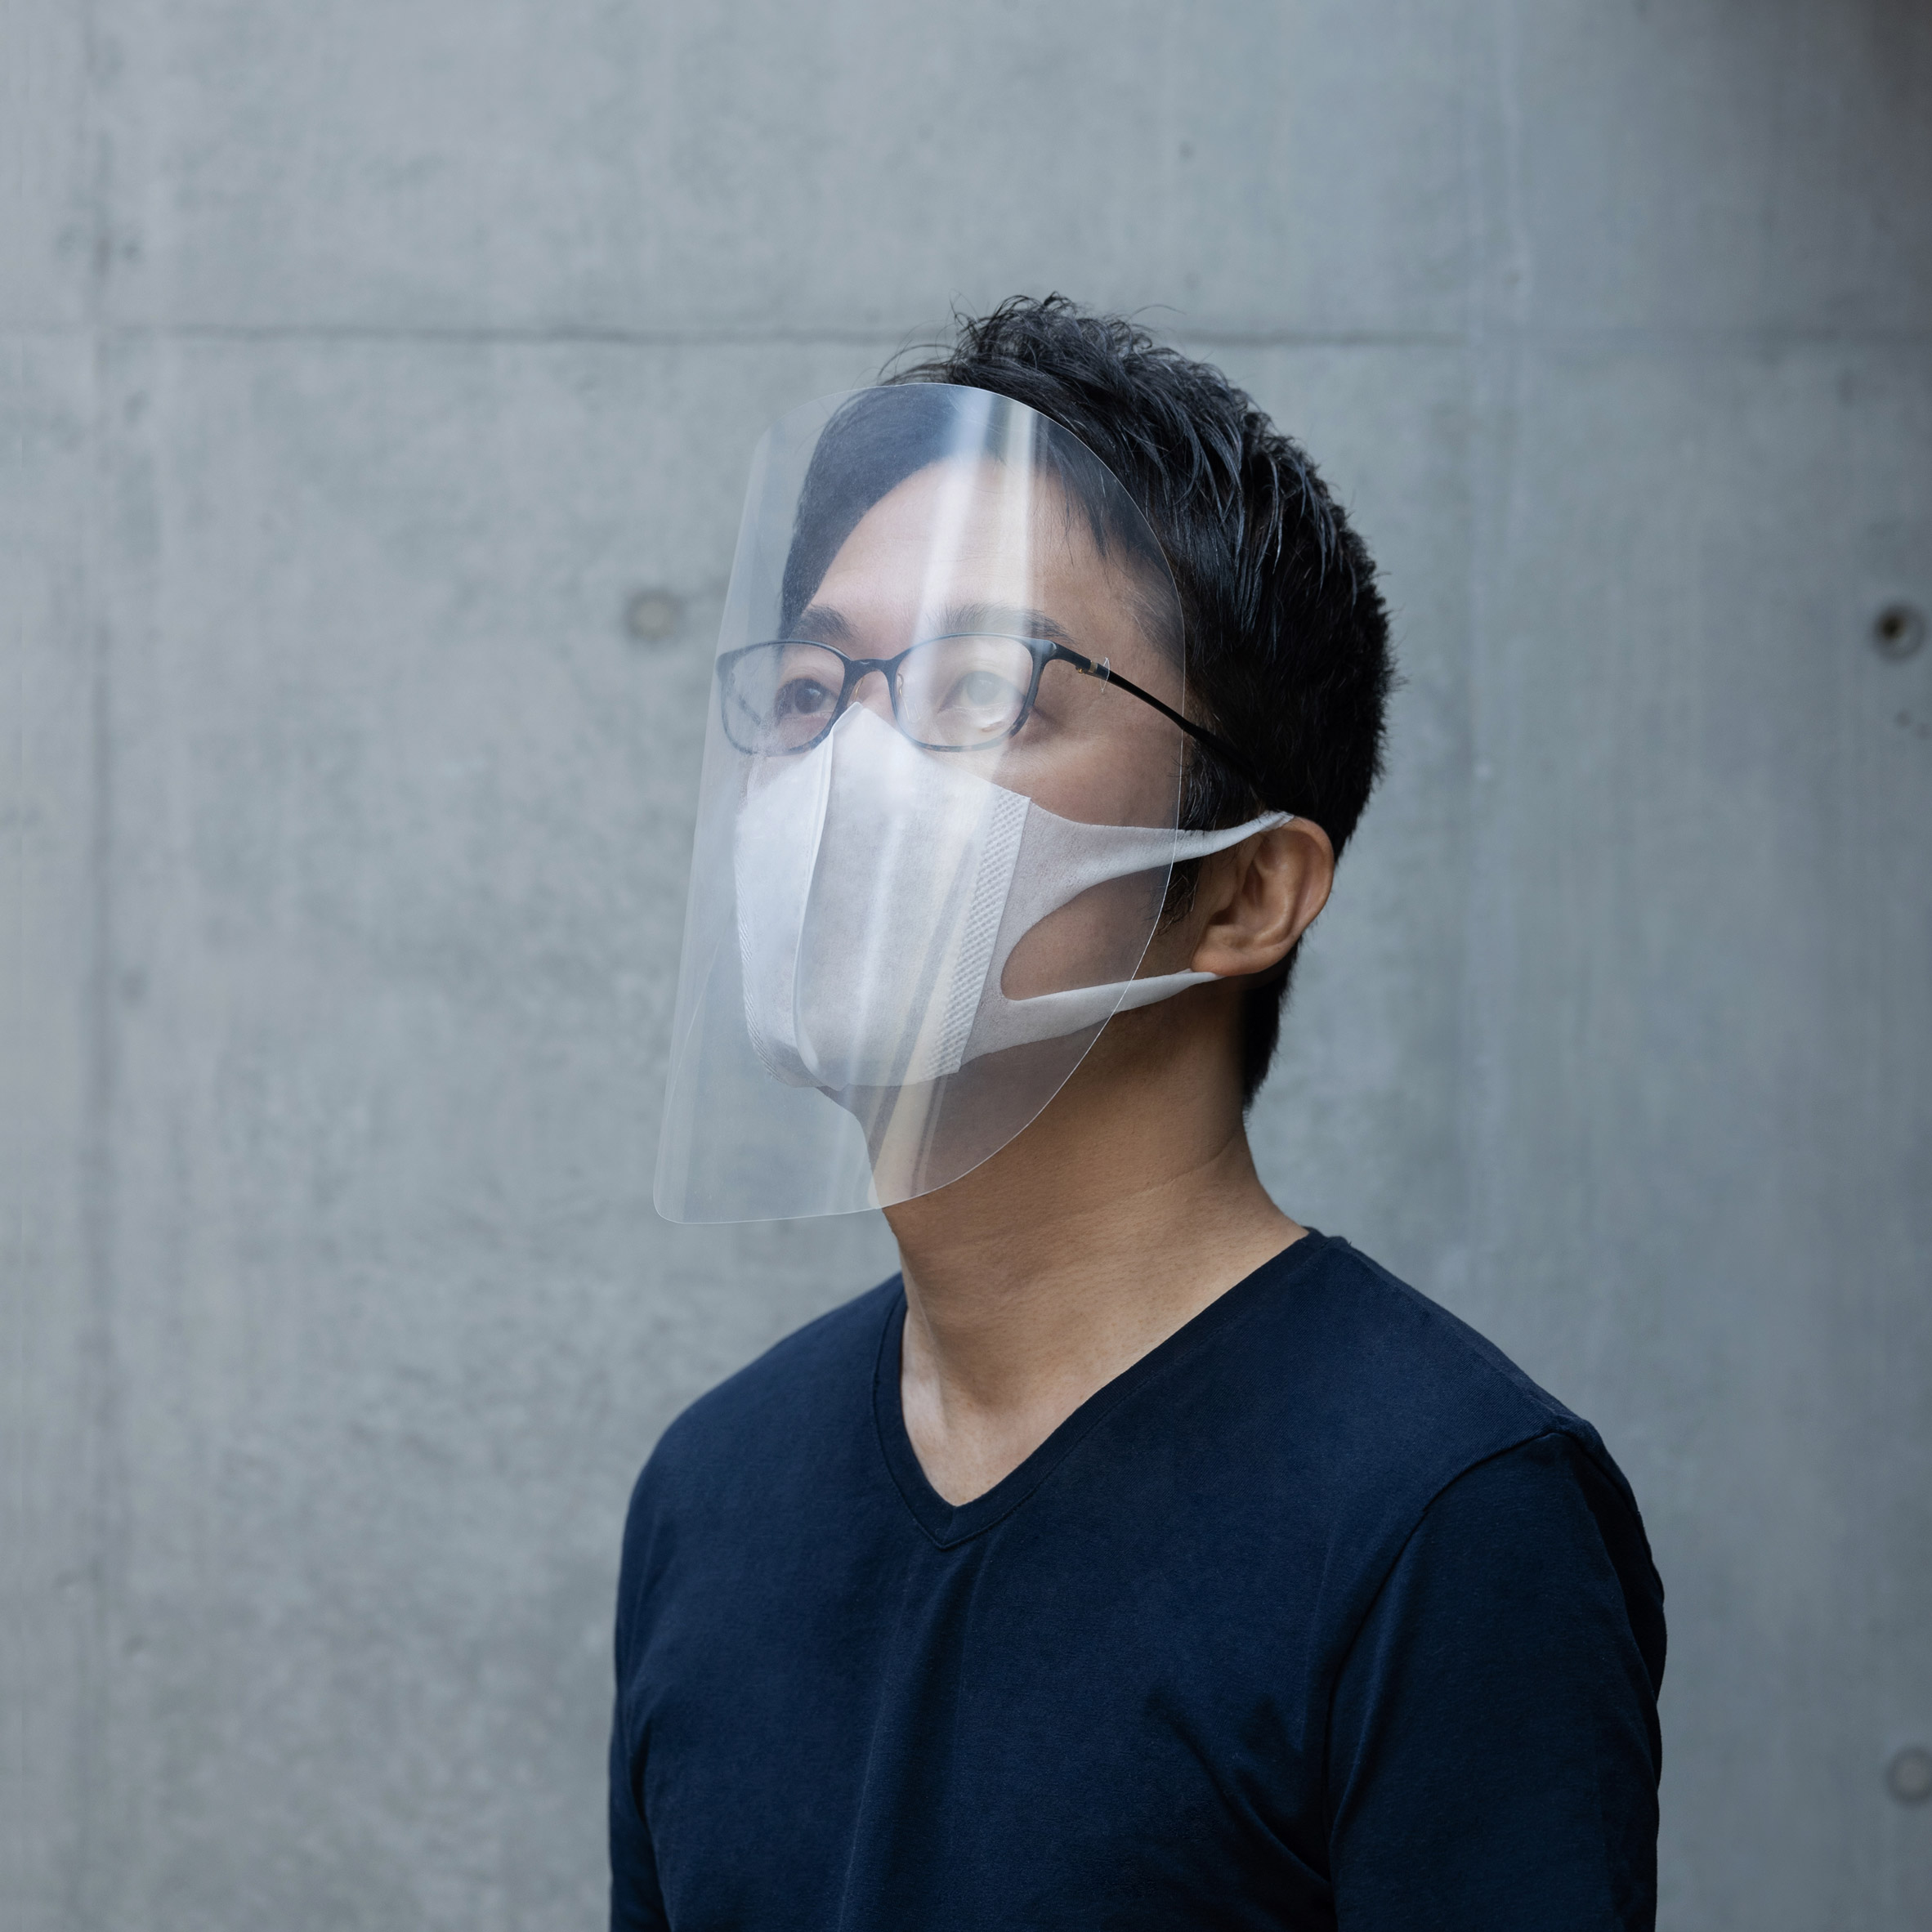 Tokujin Yoshioka shares three-step template for emergency face shields